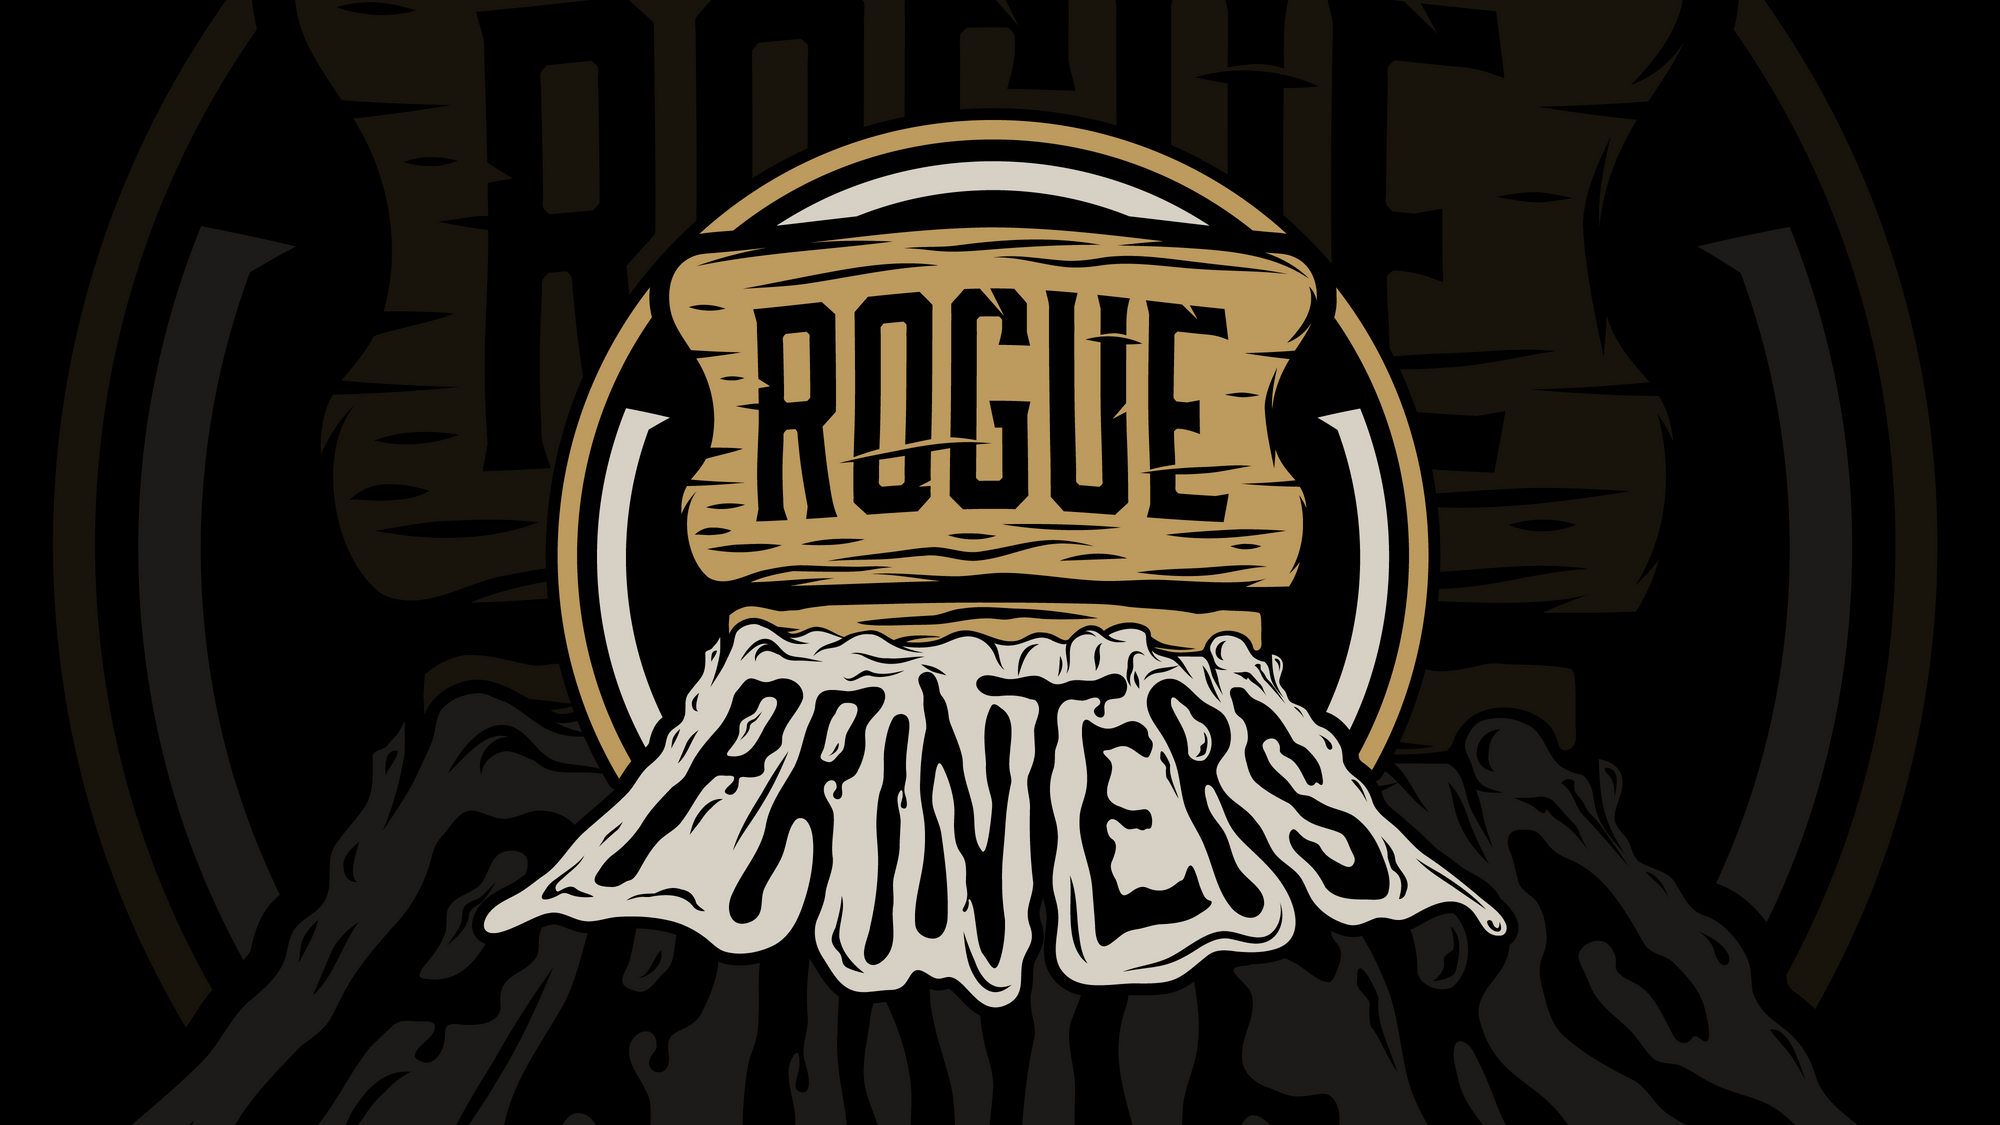 Free Rogue Printers Vector Graphic